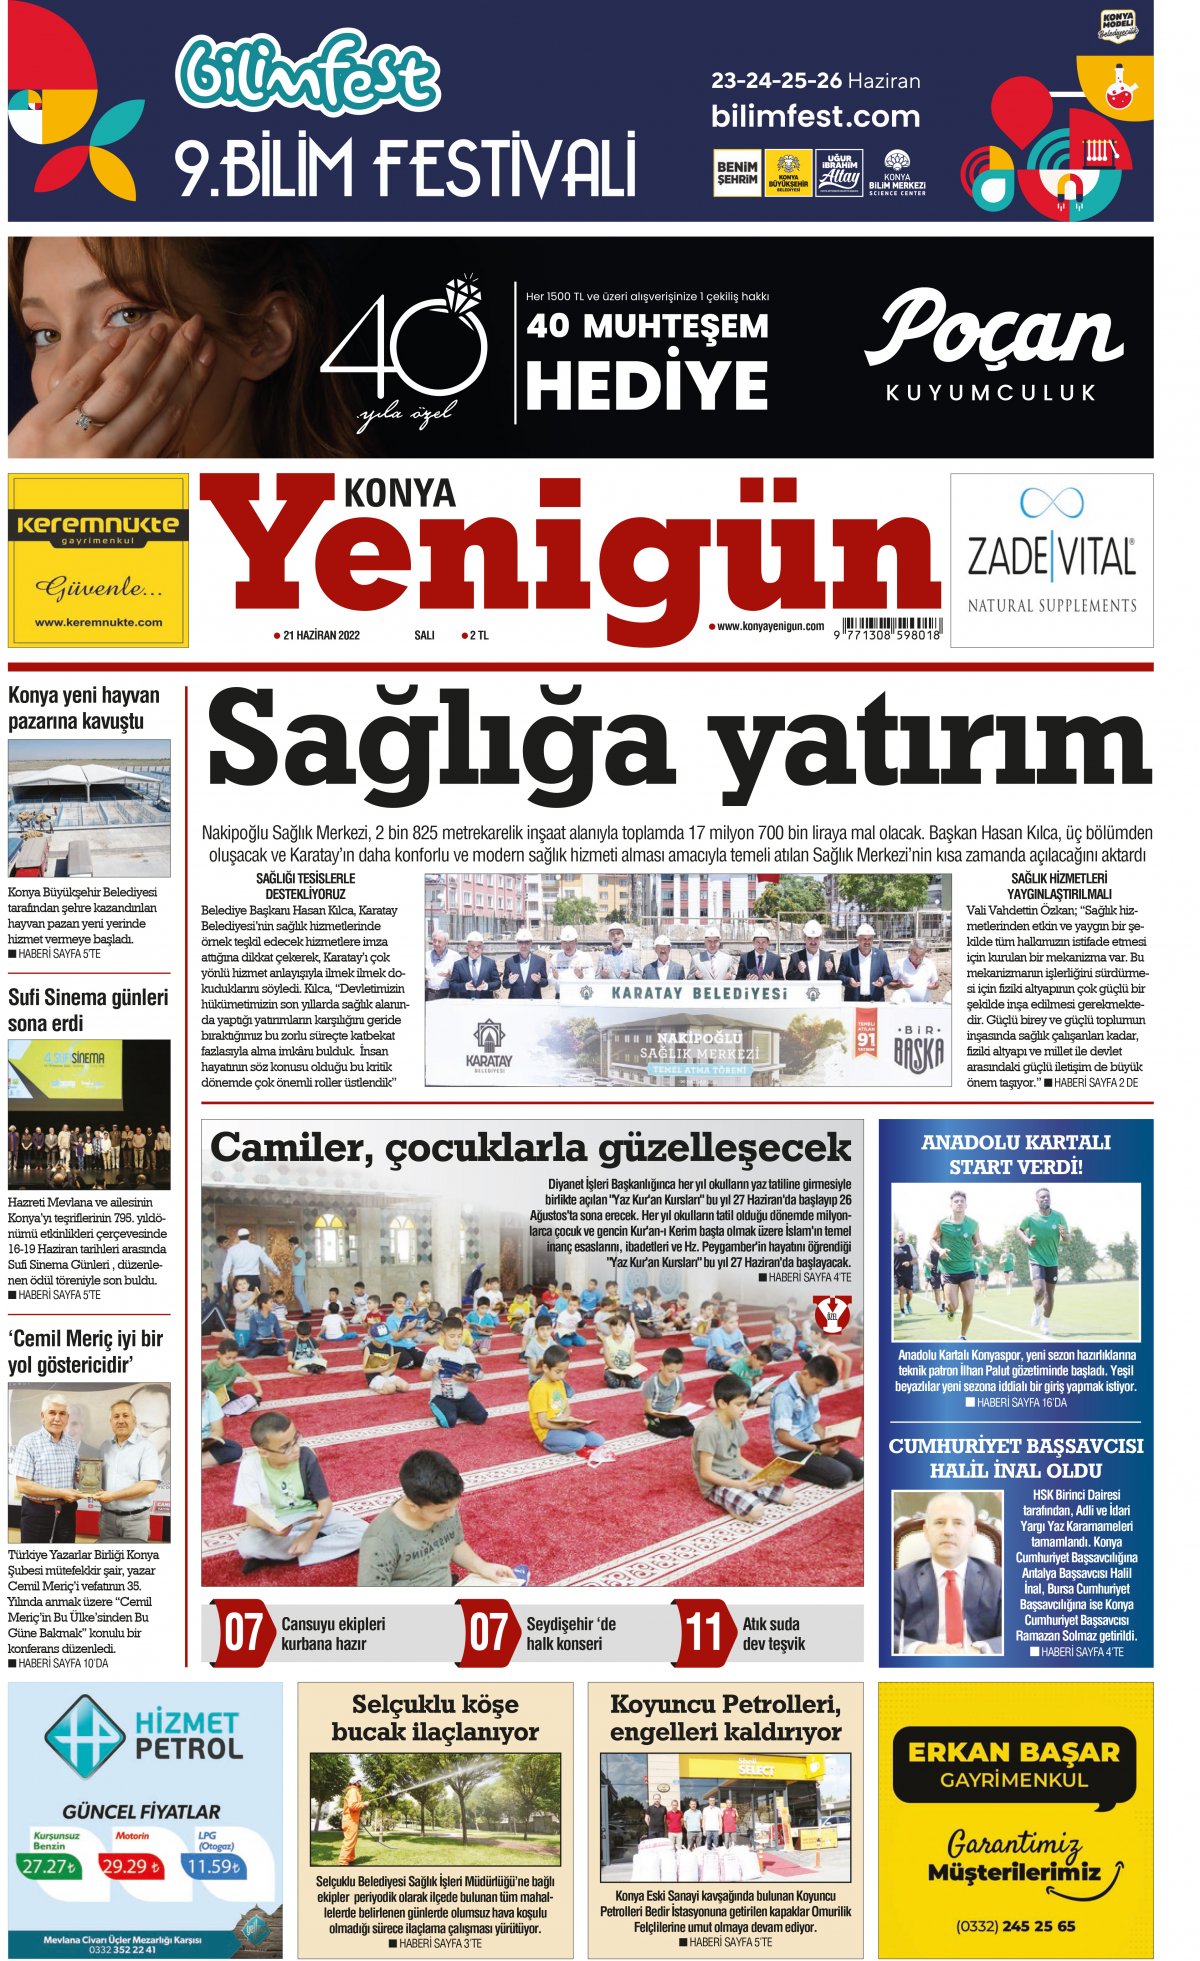 Konya Yenigün Gazetesi - 21.06.2022 Manşeti